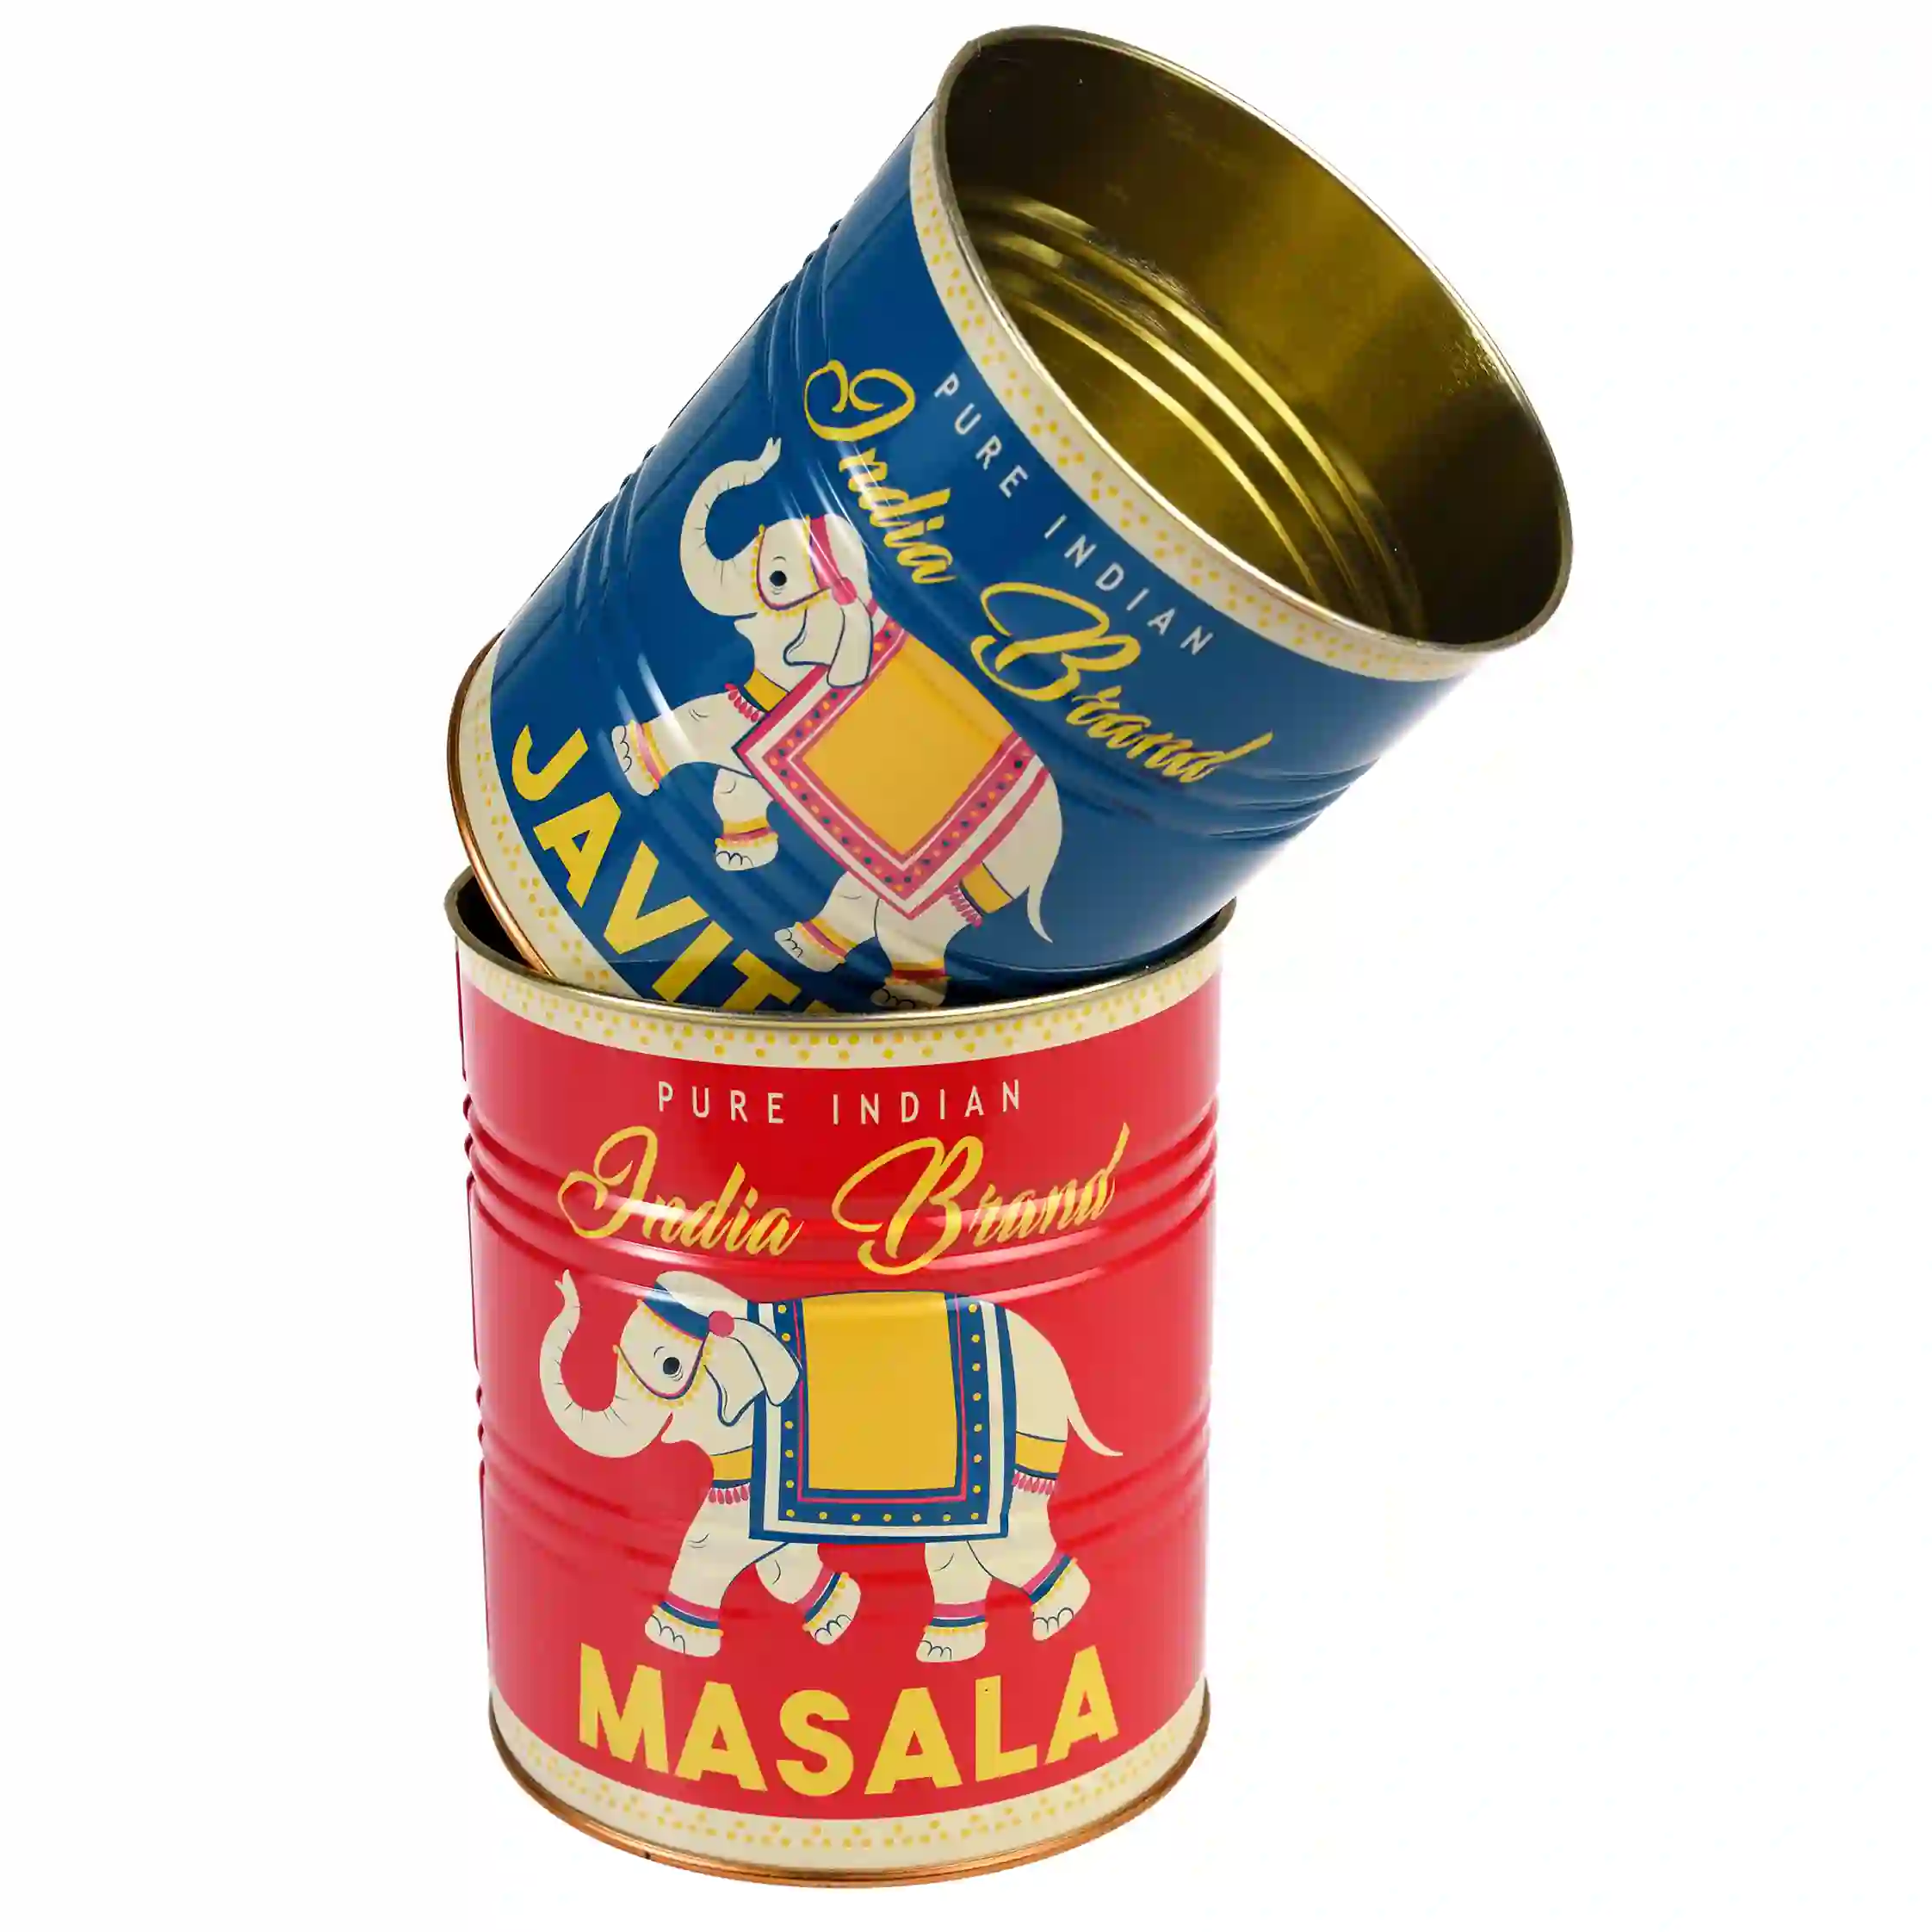 storage tins (set of 2) - masala and javitri